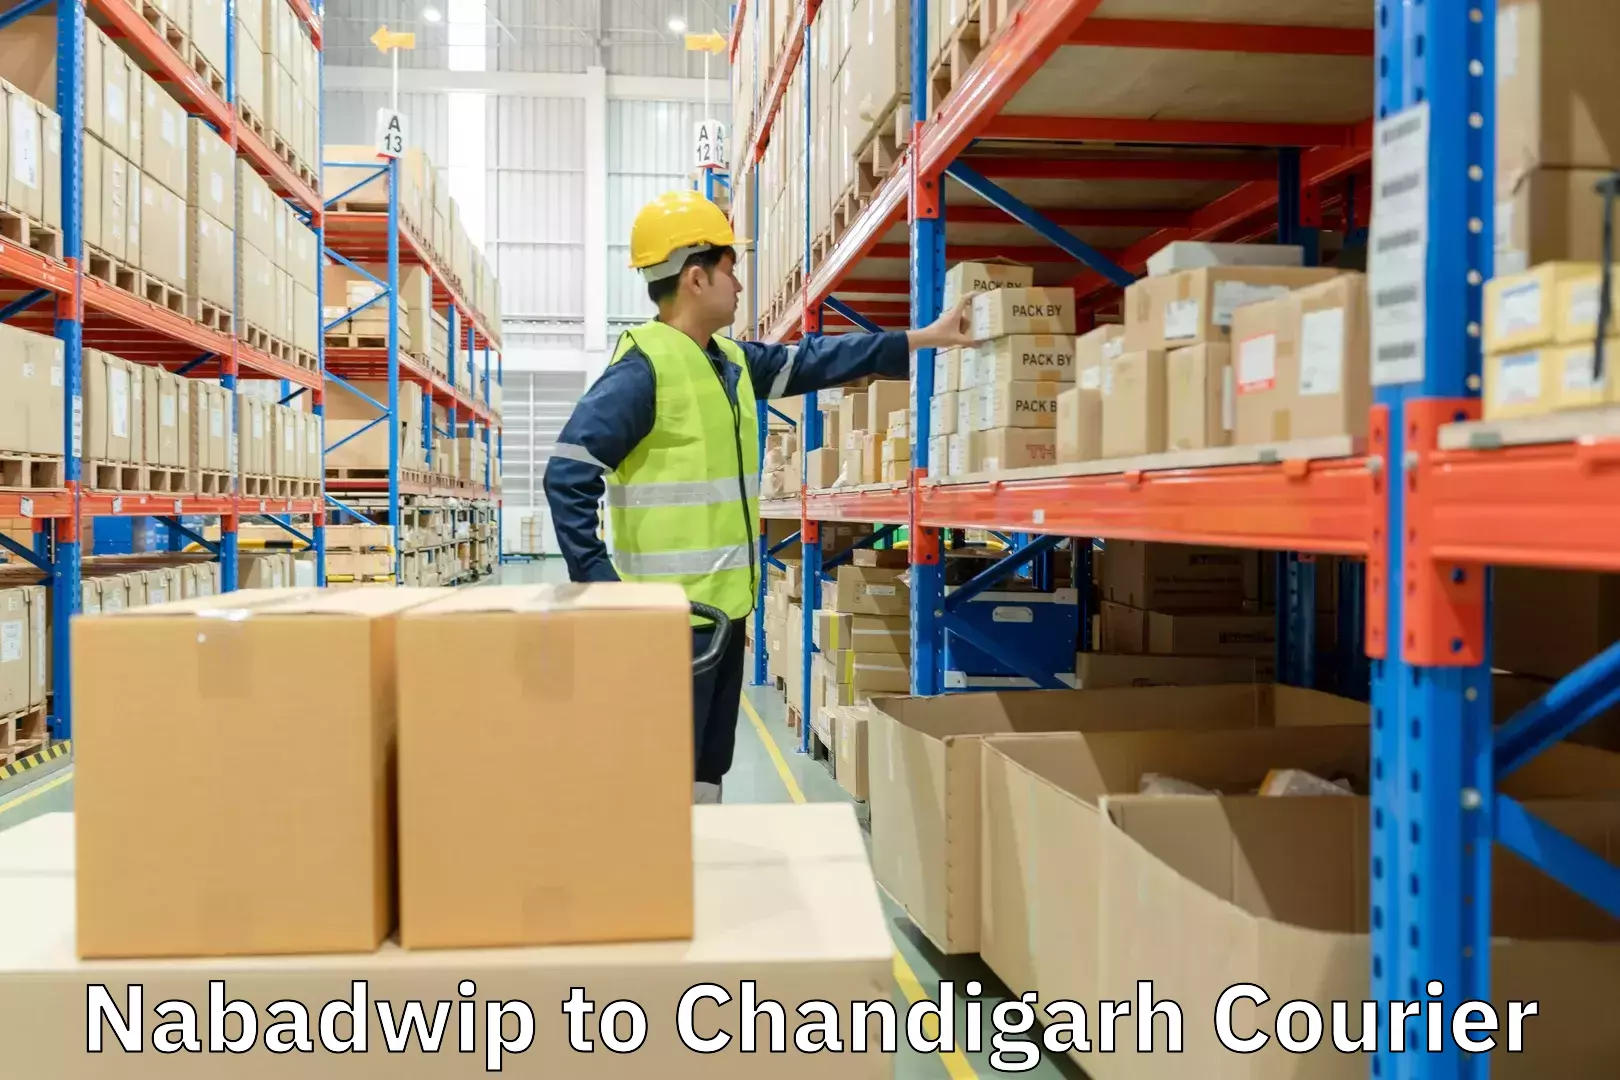 Speedy delivery service Nabadwip to Chandigarh